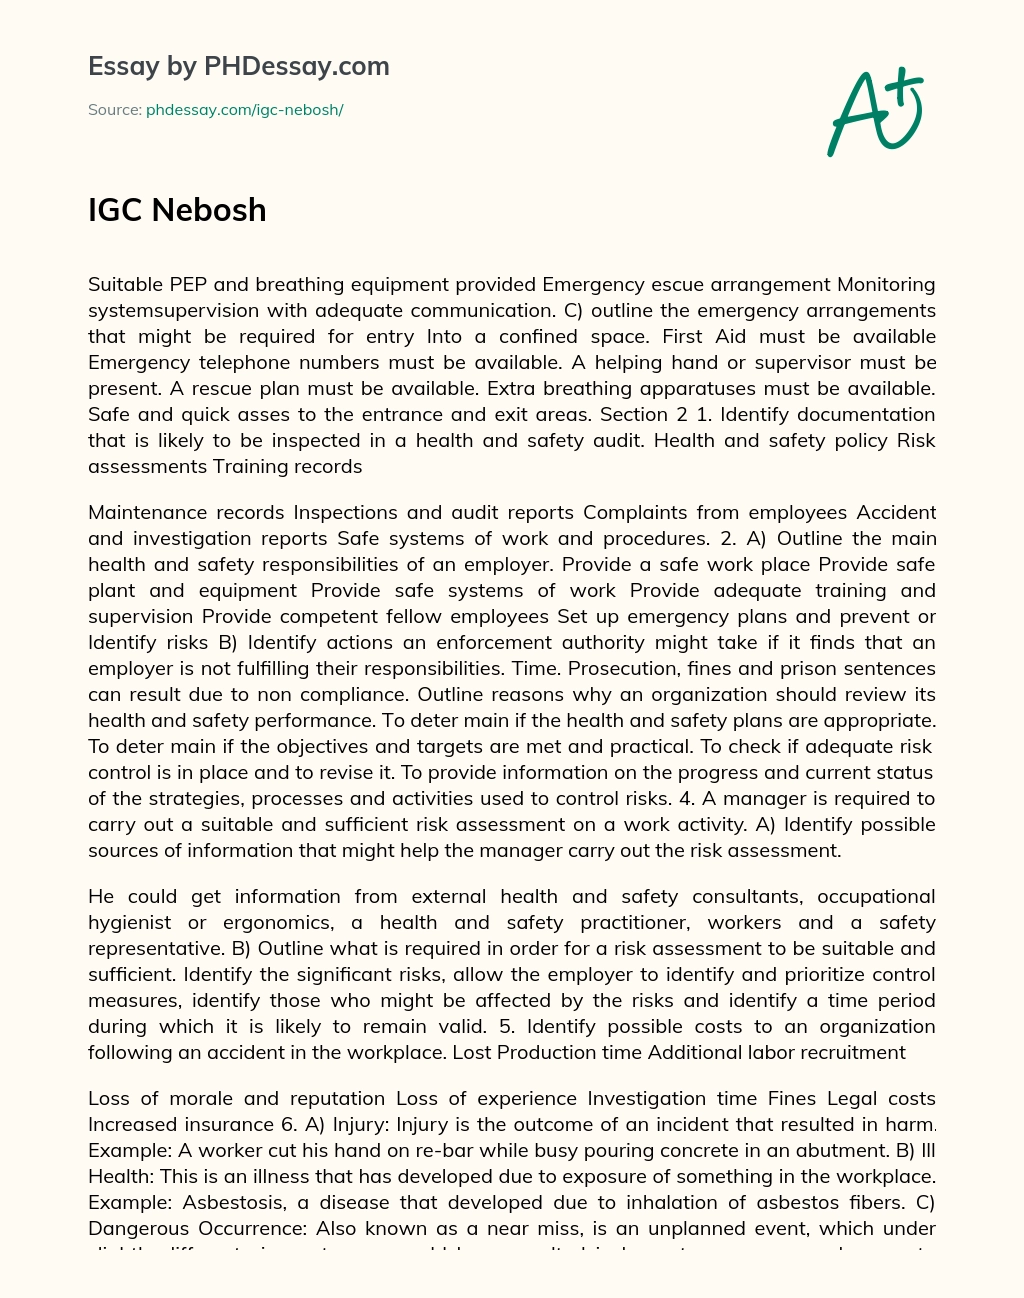 IGC Nebosh essay